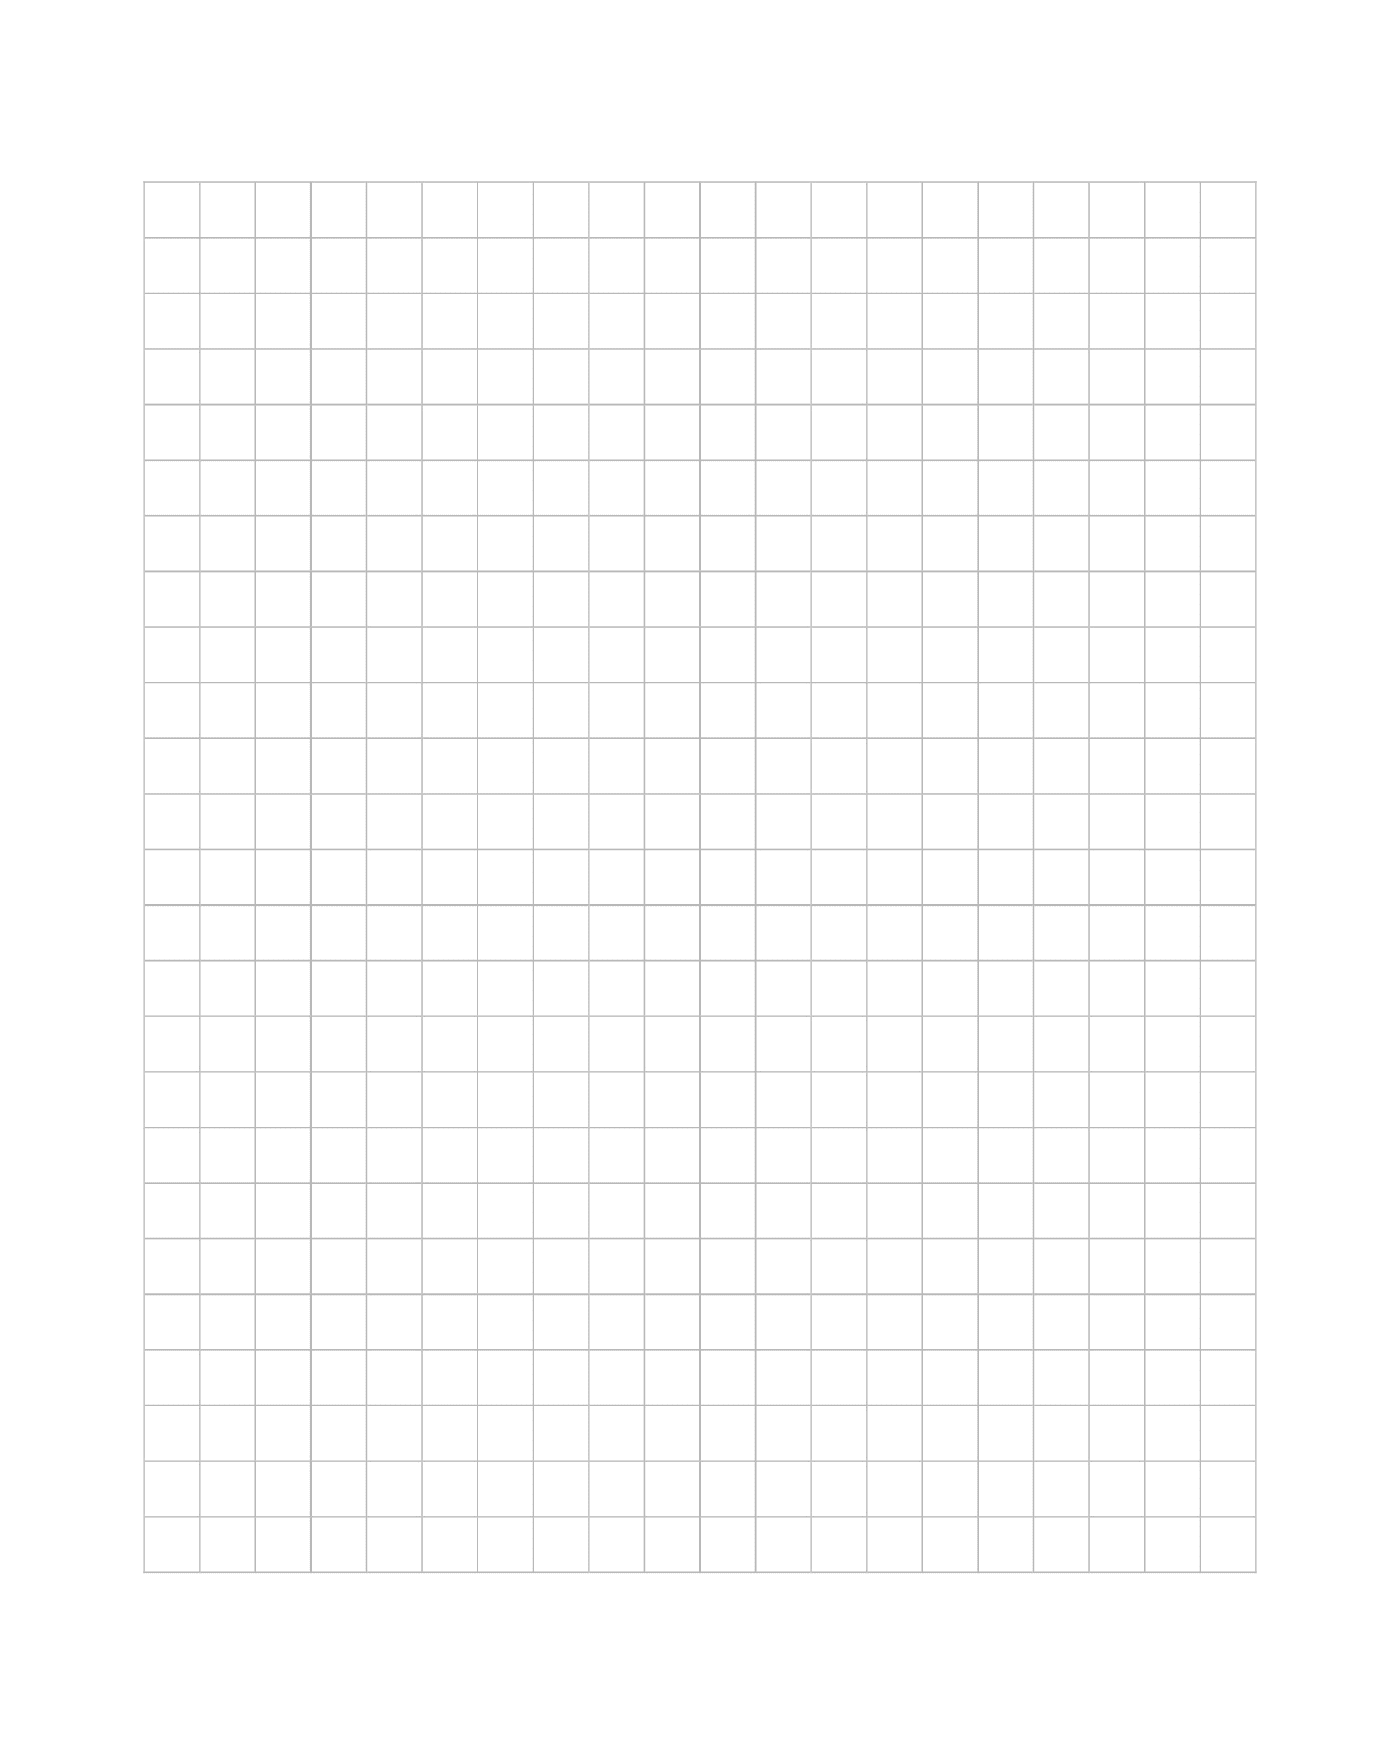  A blank grid to make pixel art 